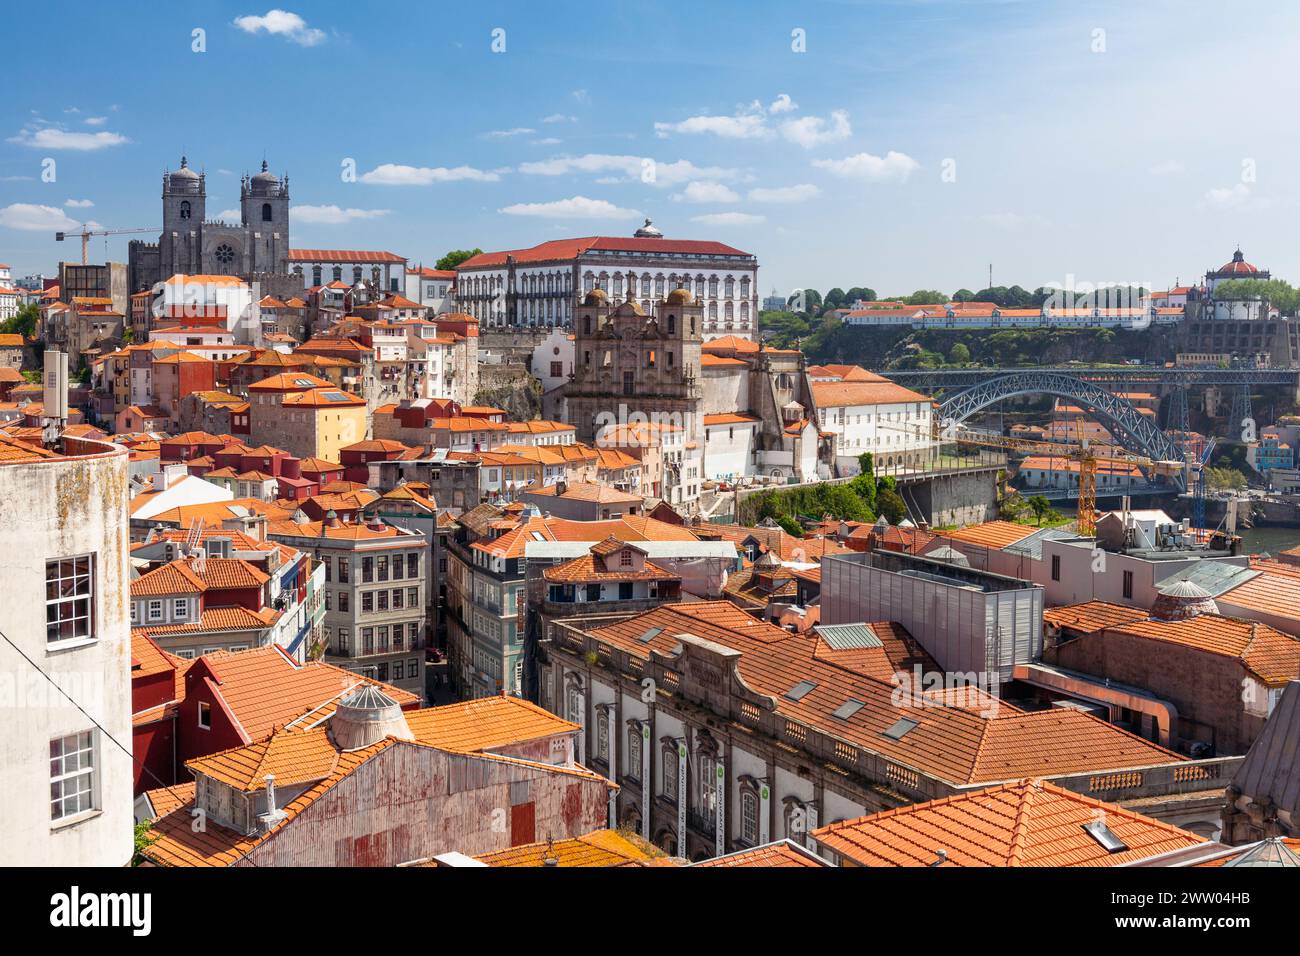 Portugal, Porto, vue sur le quartier de Ribeira depuis le point pittoresque Miradouro da Vitória Banque D'Images